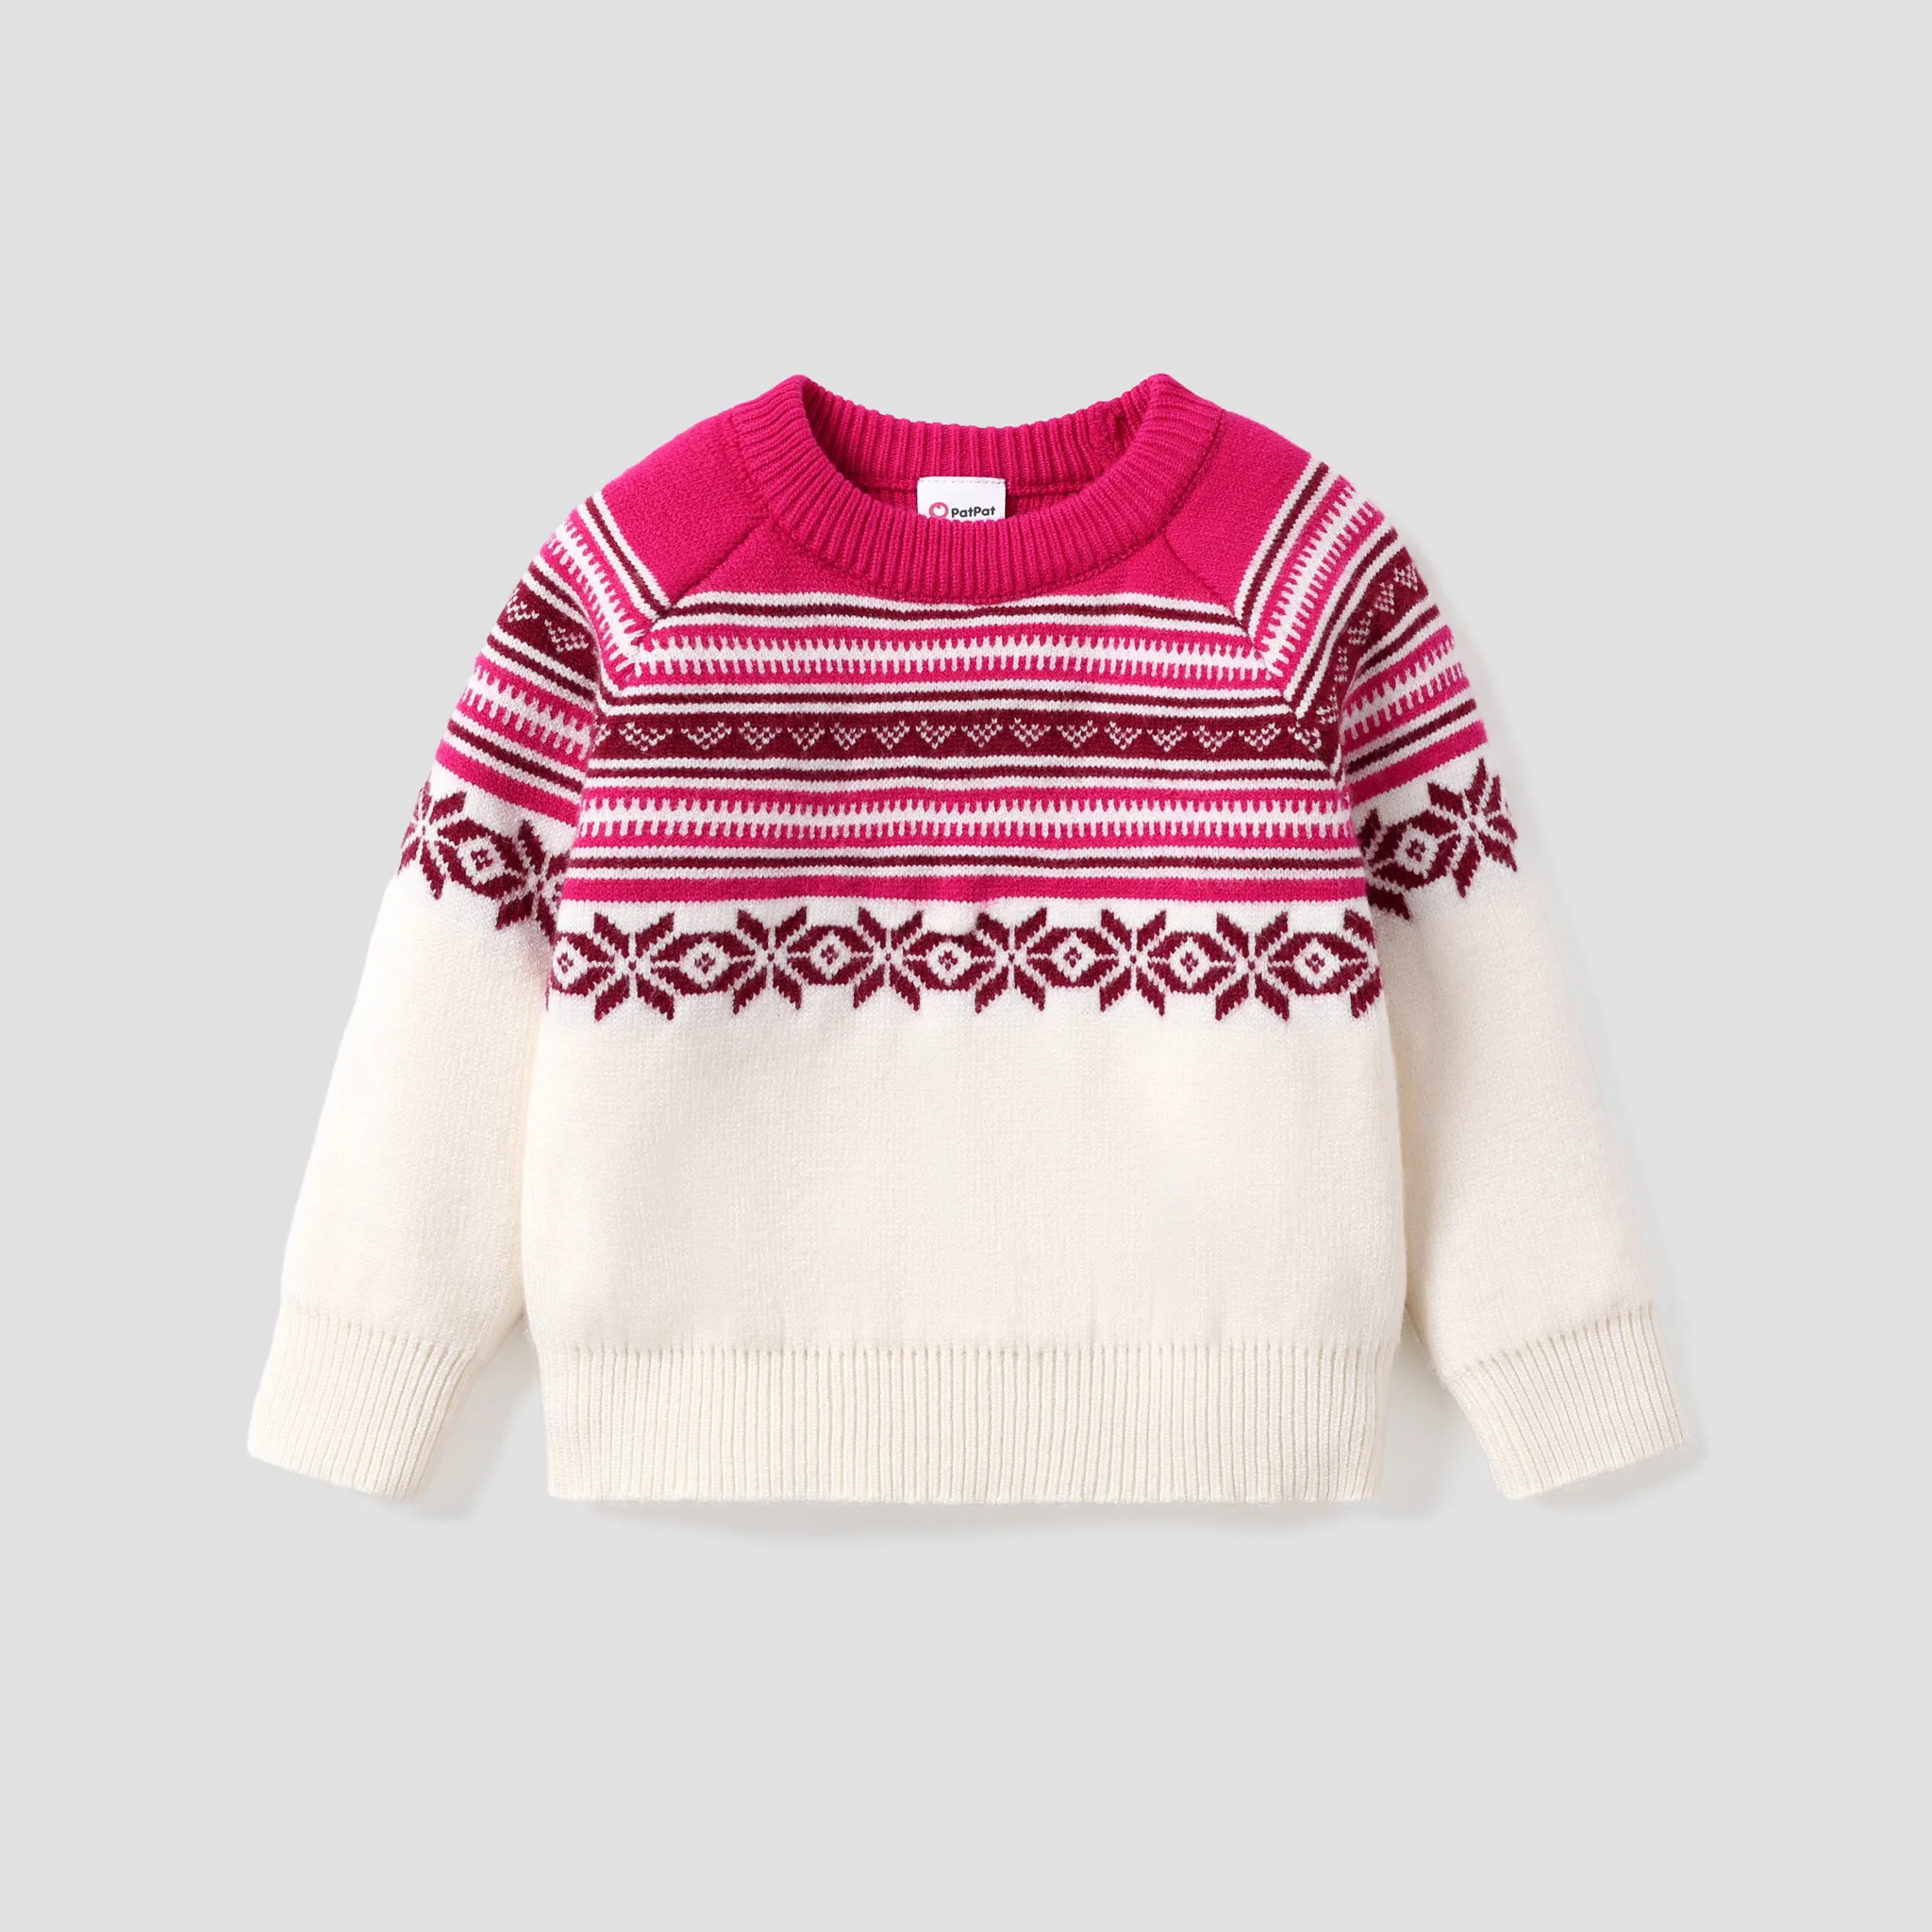 

Baby/Toddler Girl/Boy Maple Leaf Geometric/Fair isle pattern Sweater